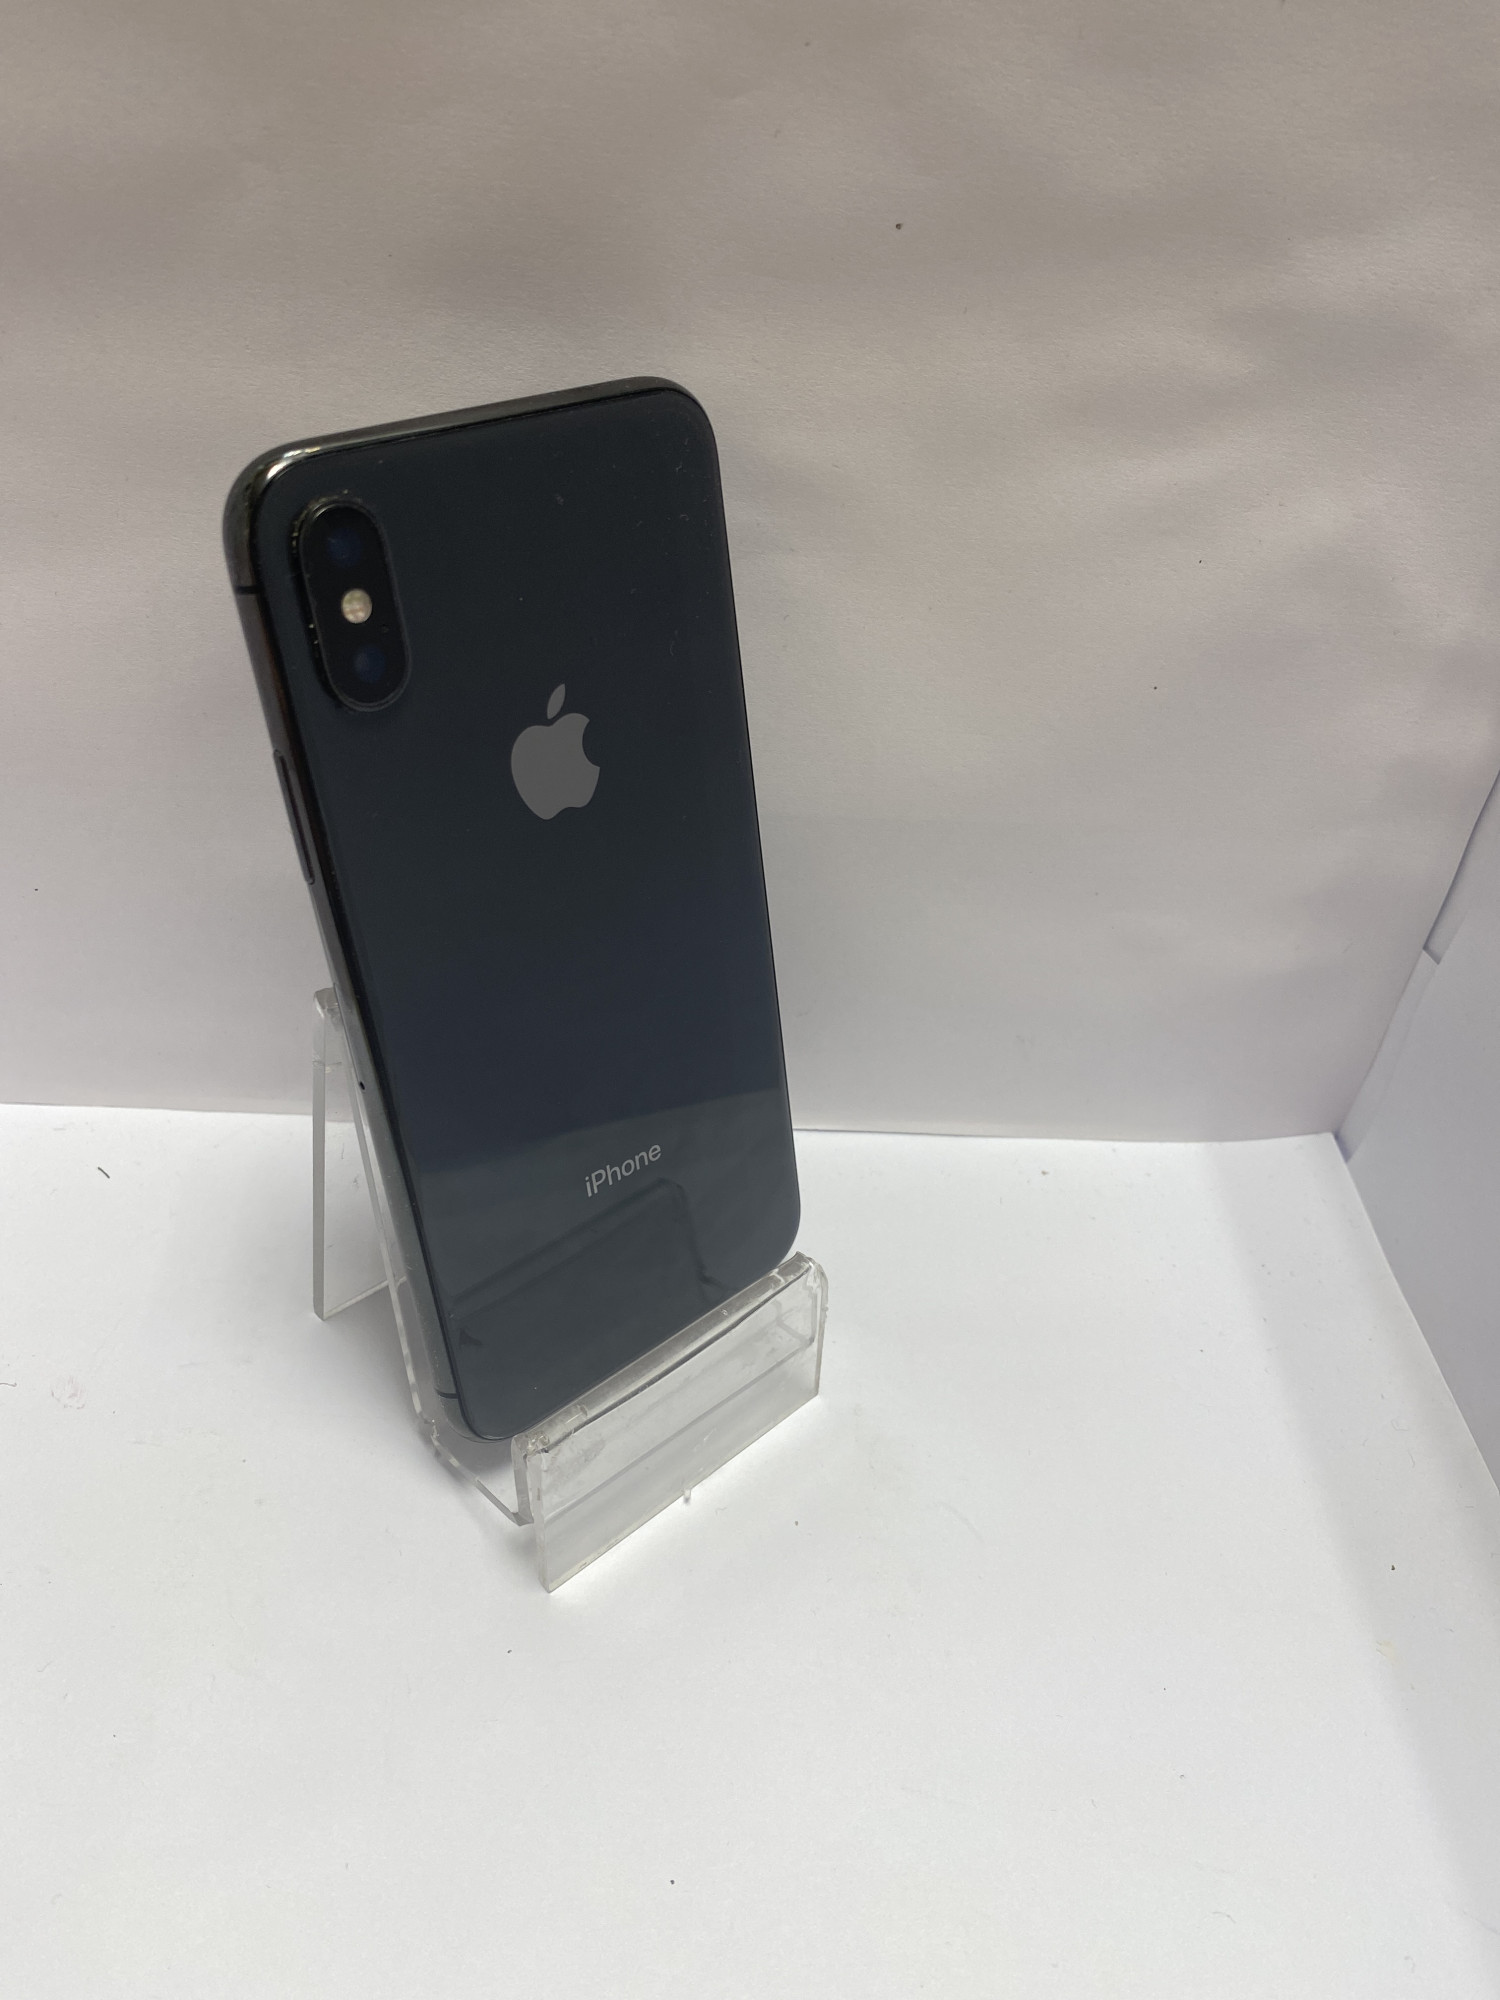 Apple iPhone X 256Gb Space Gray (MQAF2) 4